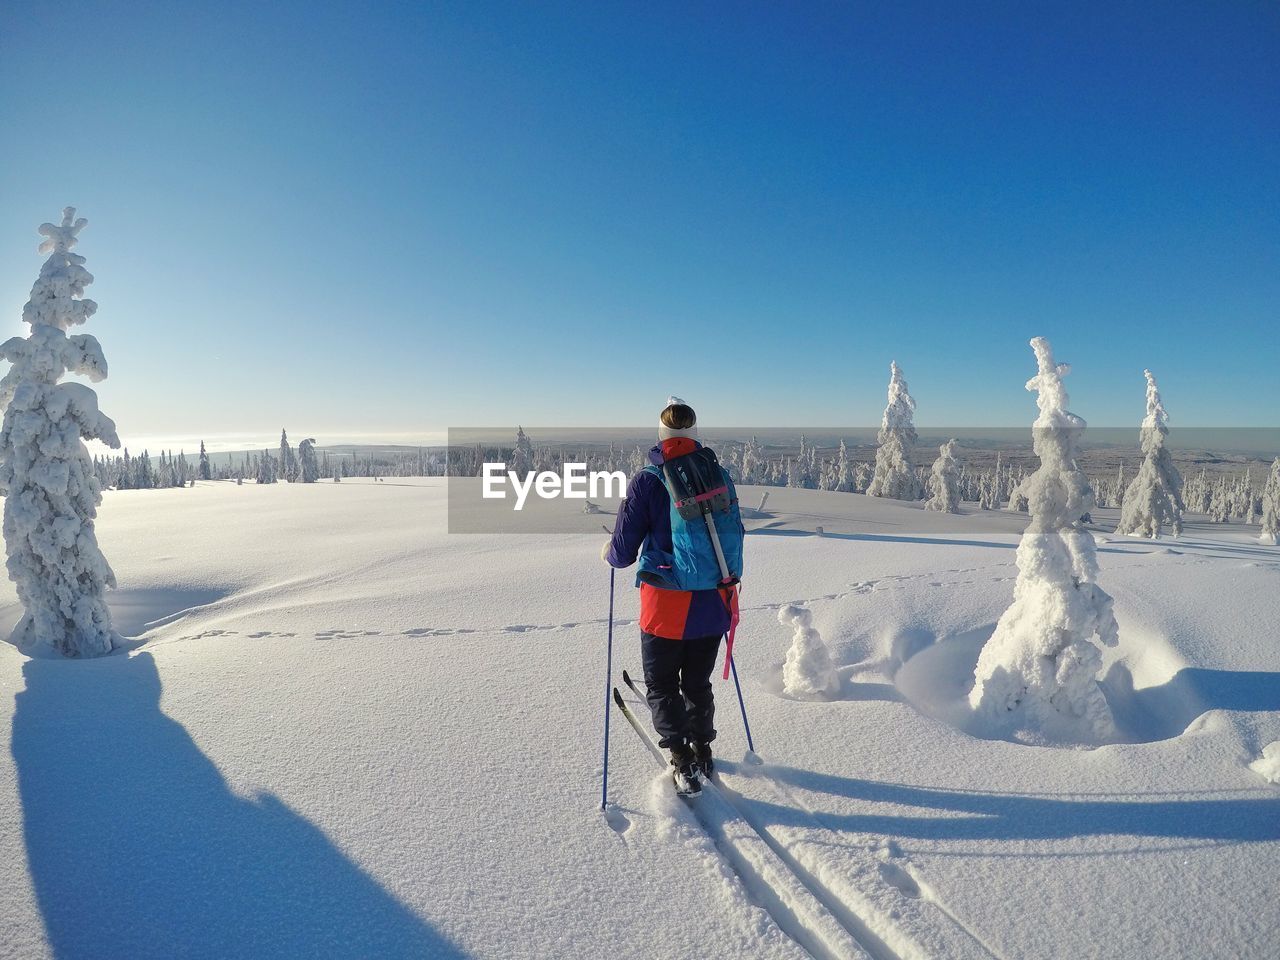 REAR VIEW OF MAN ON SNOWY FIELD AGAINST SKY